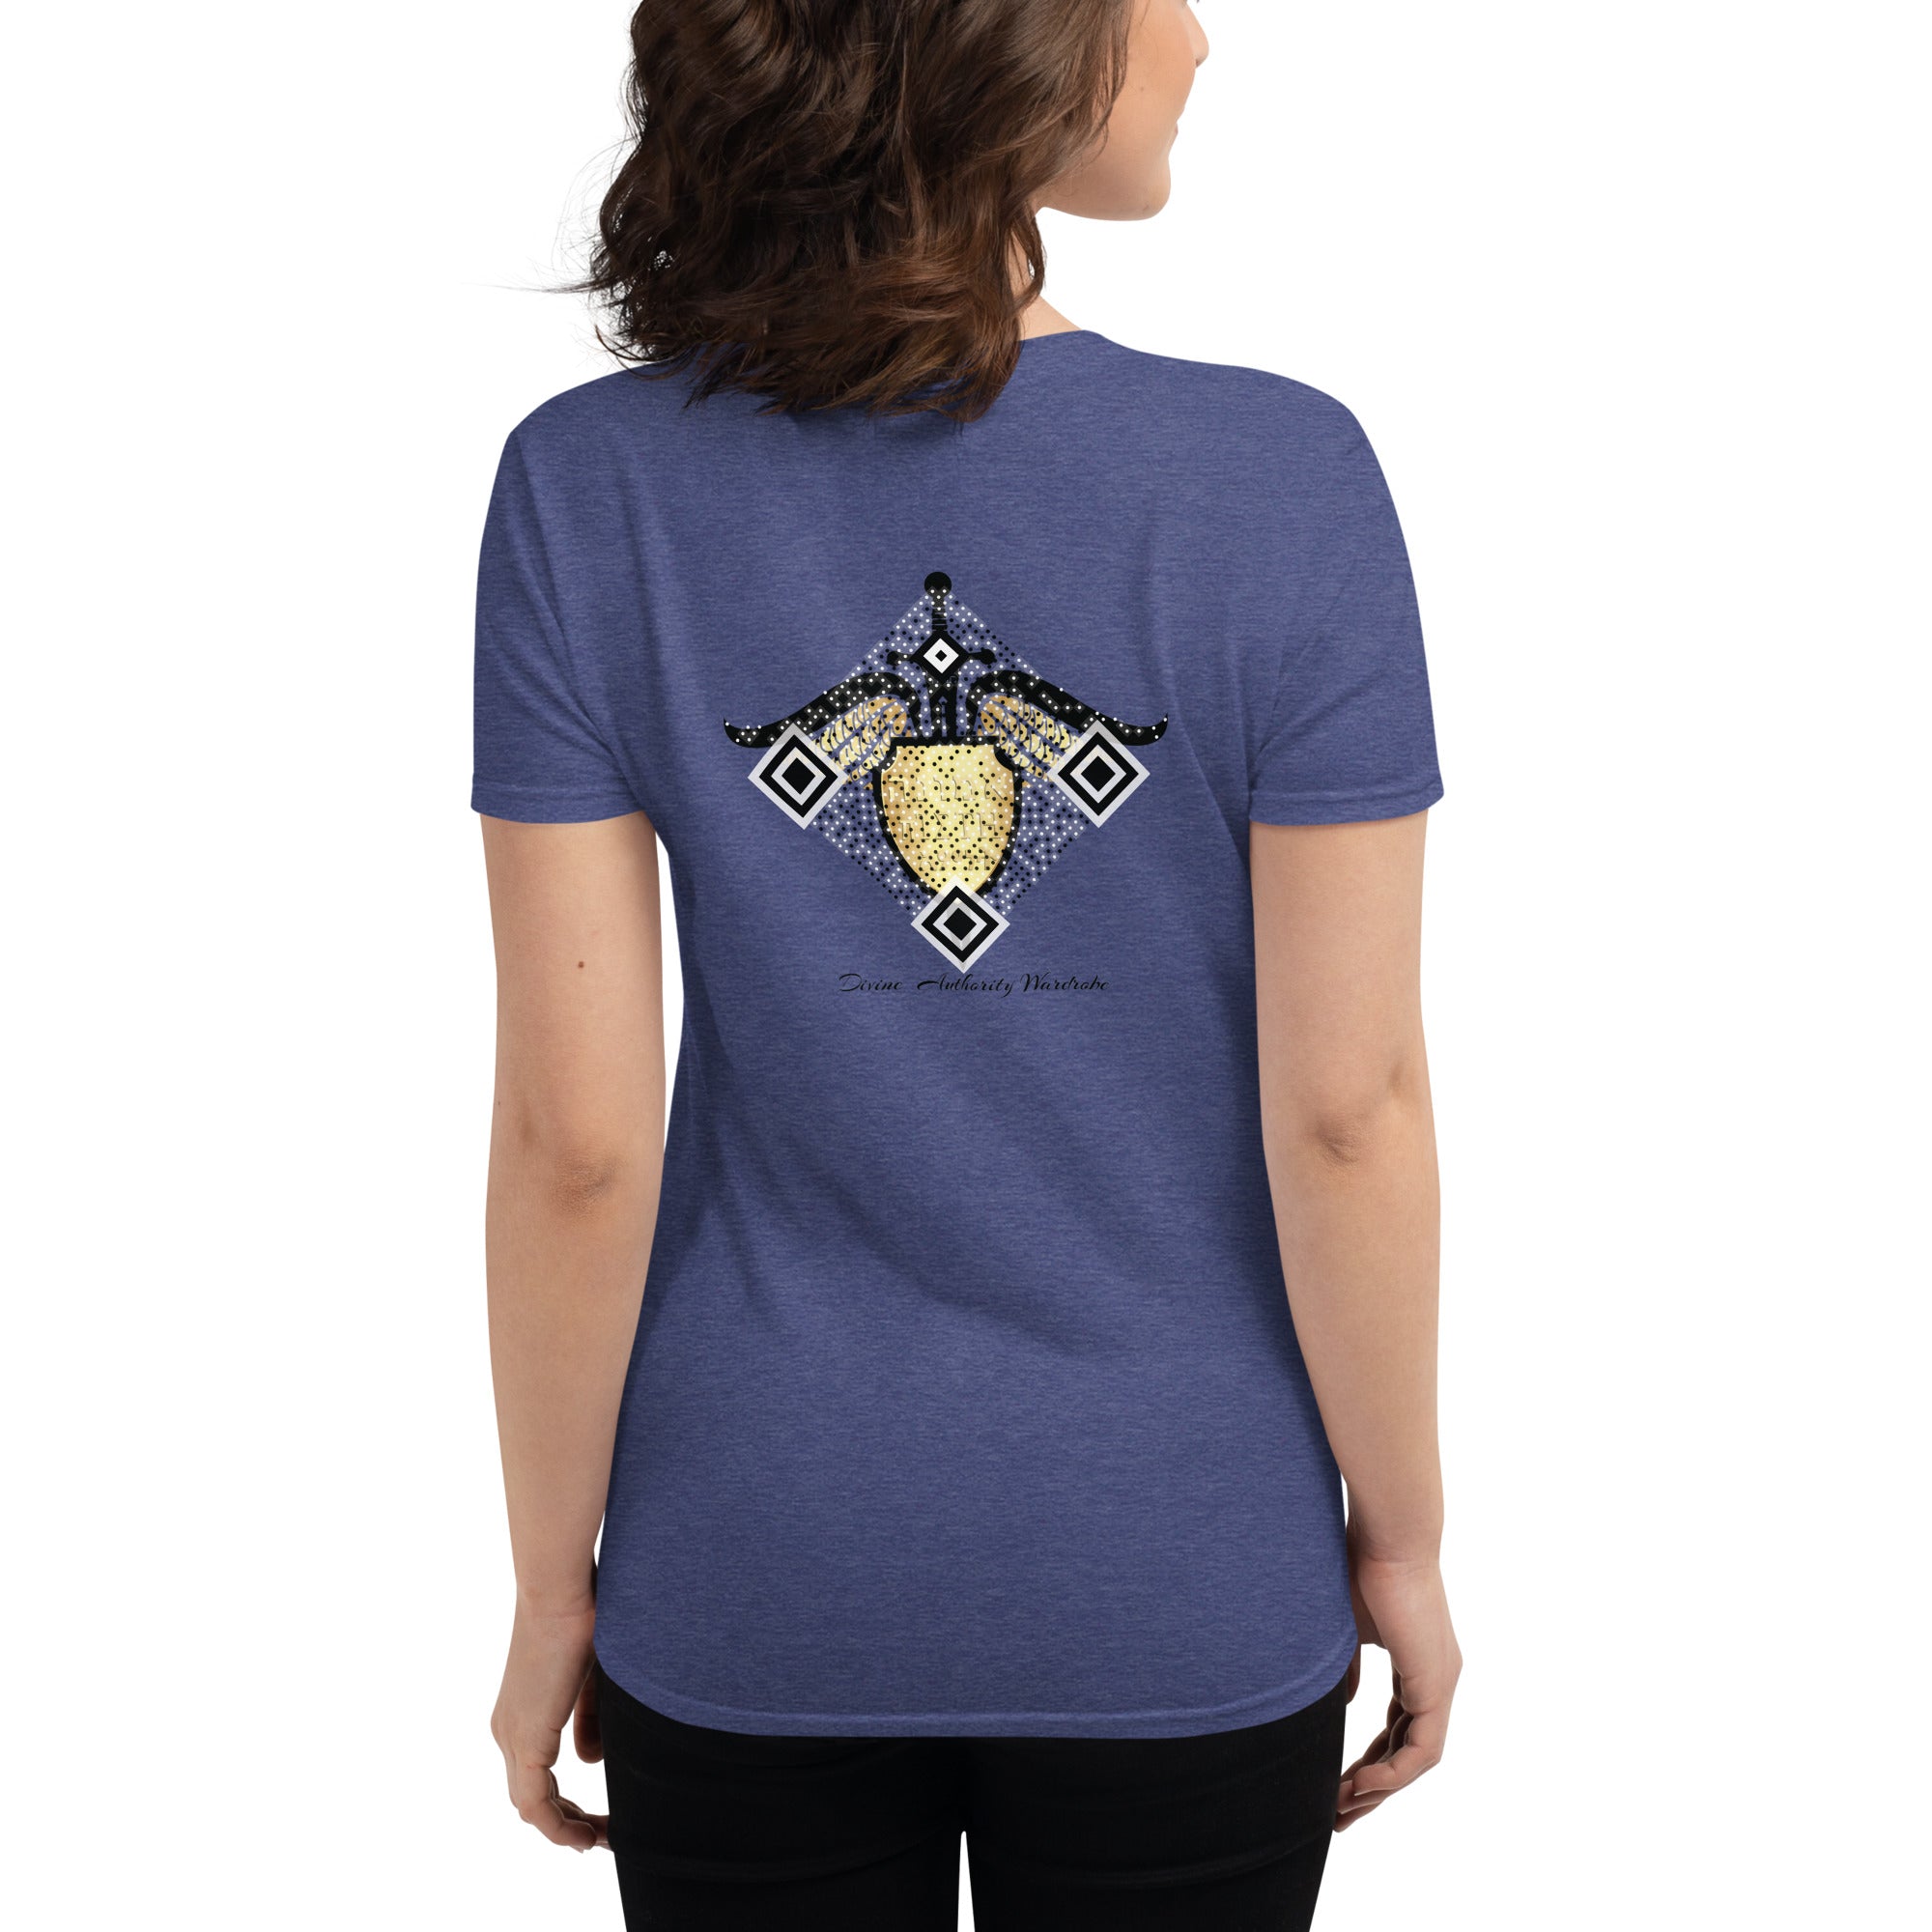 Prophecy Women's short sleeve t-shirt